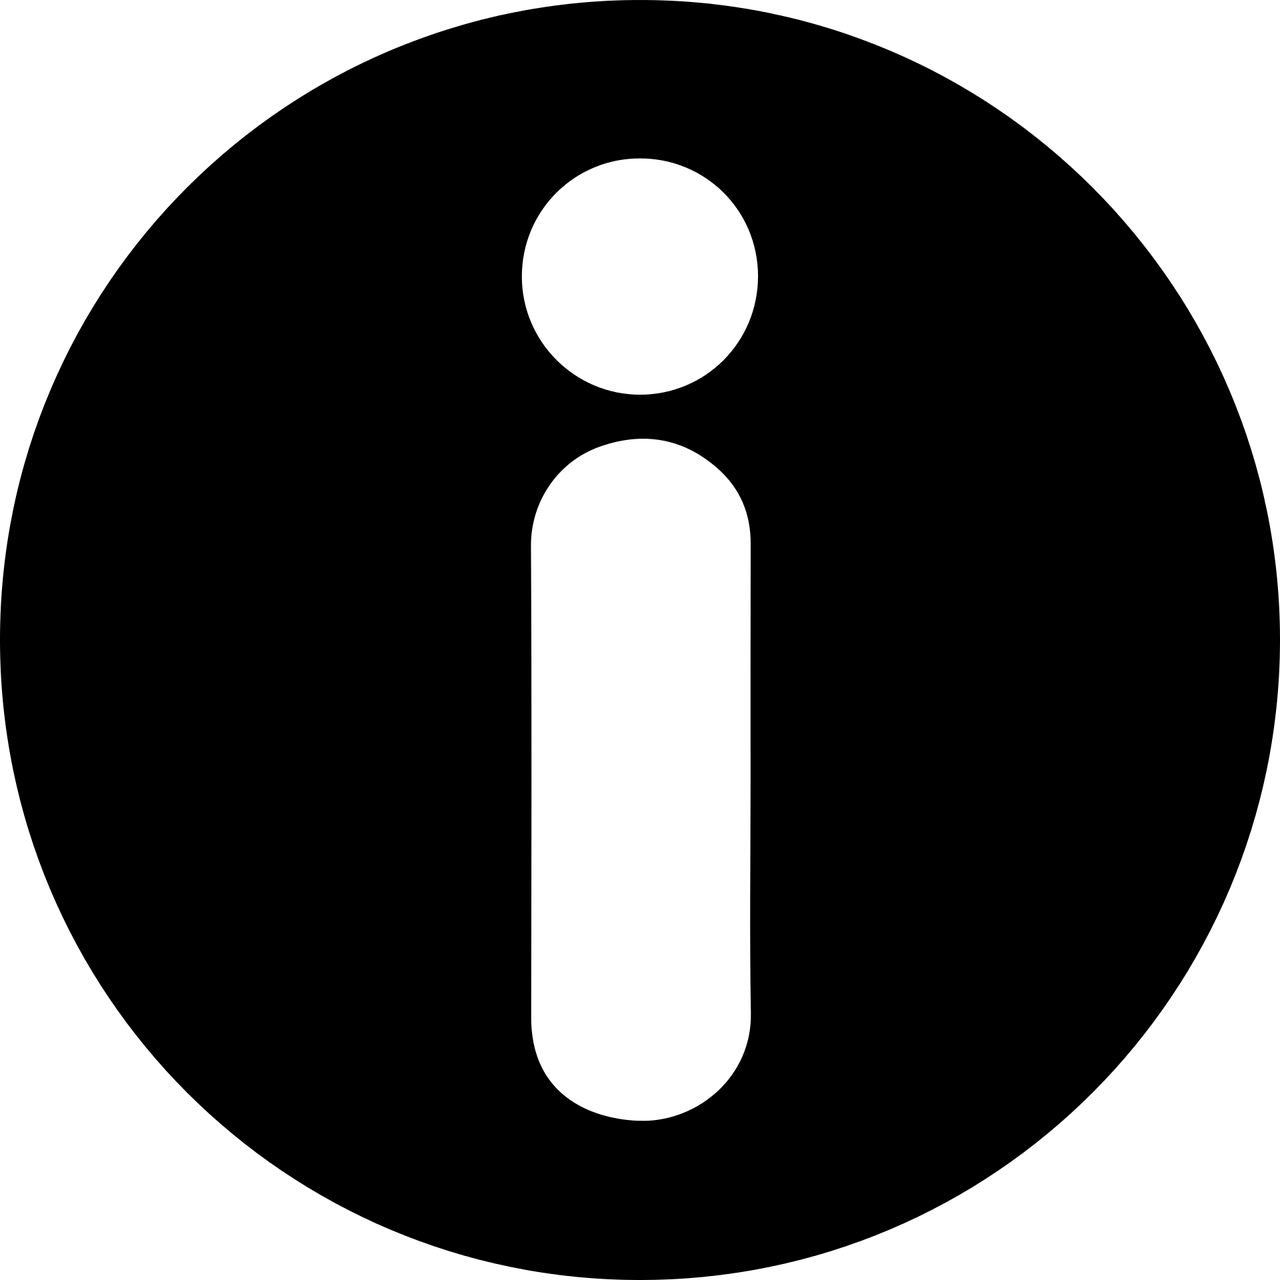 Black Circle with White Letter i Image